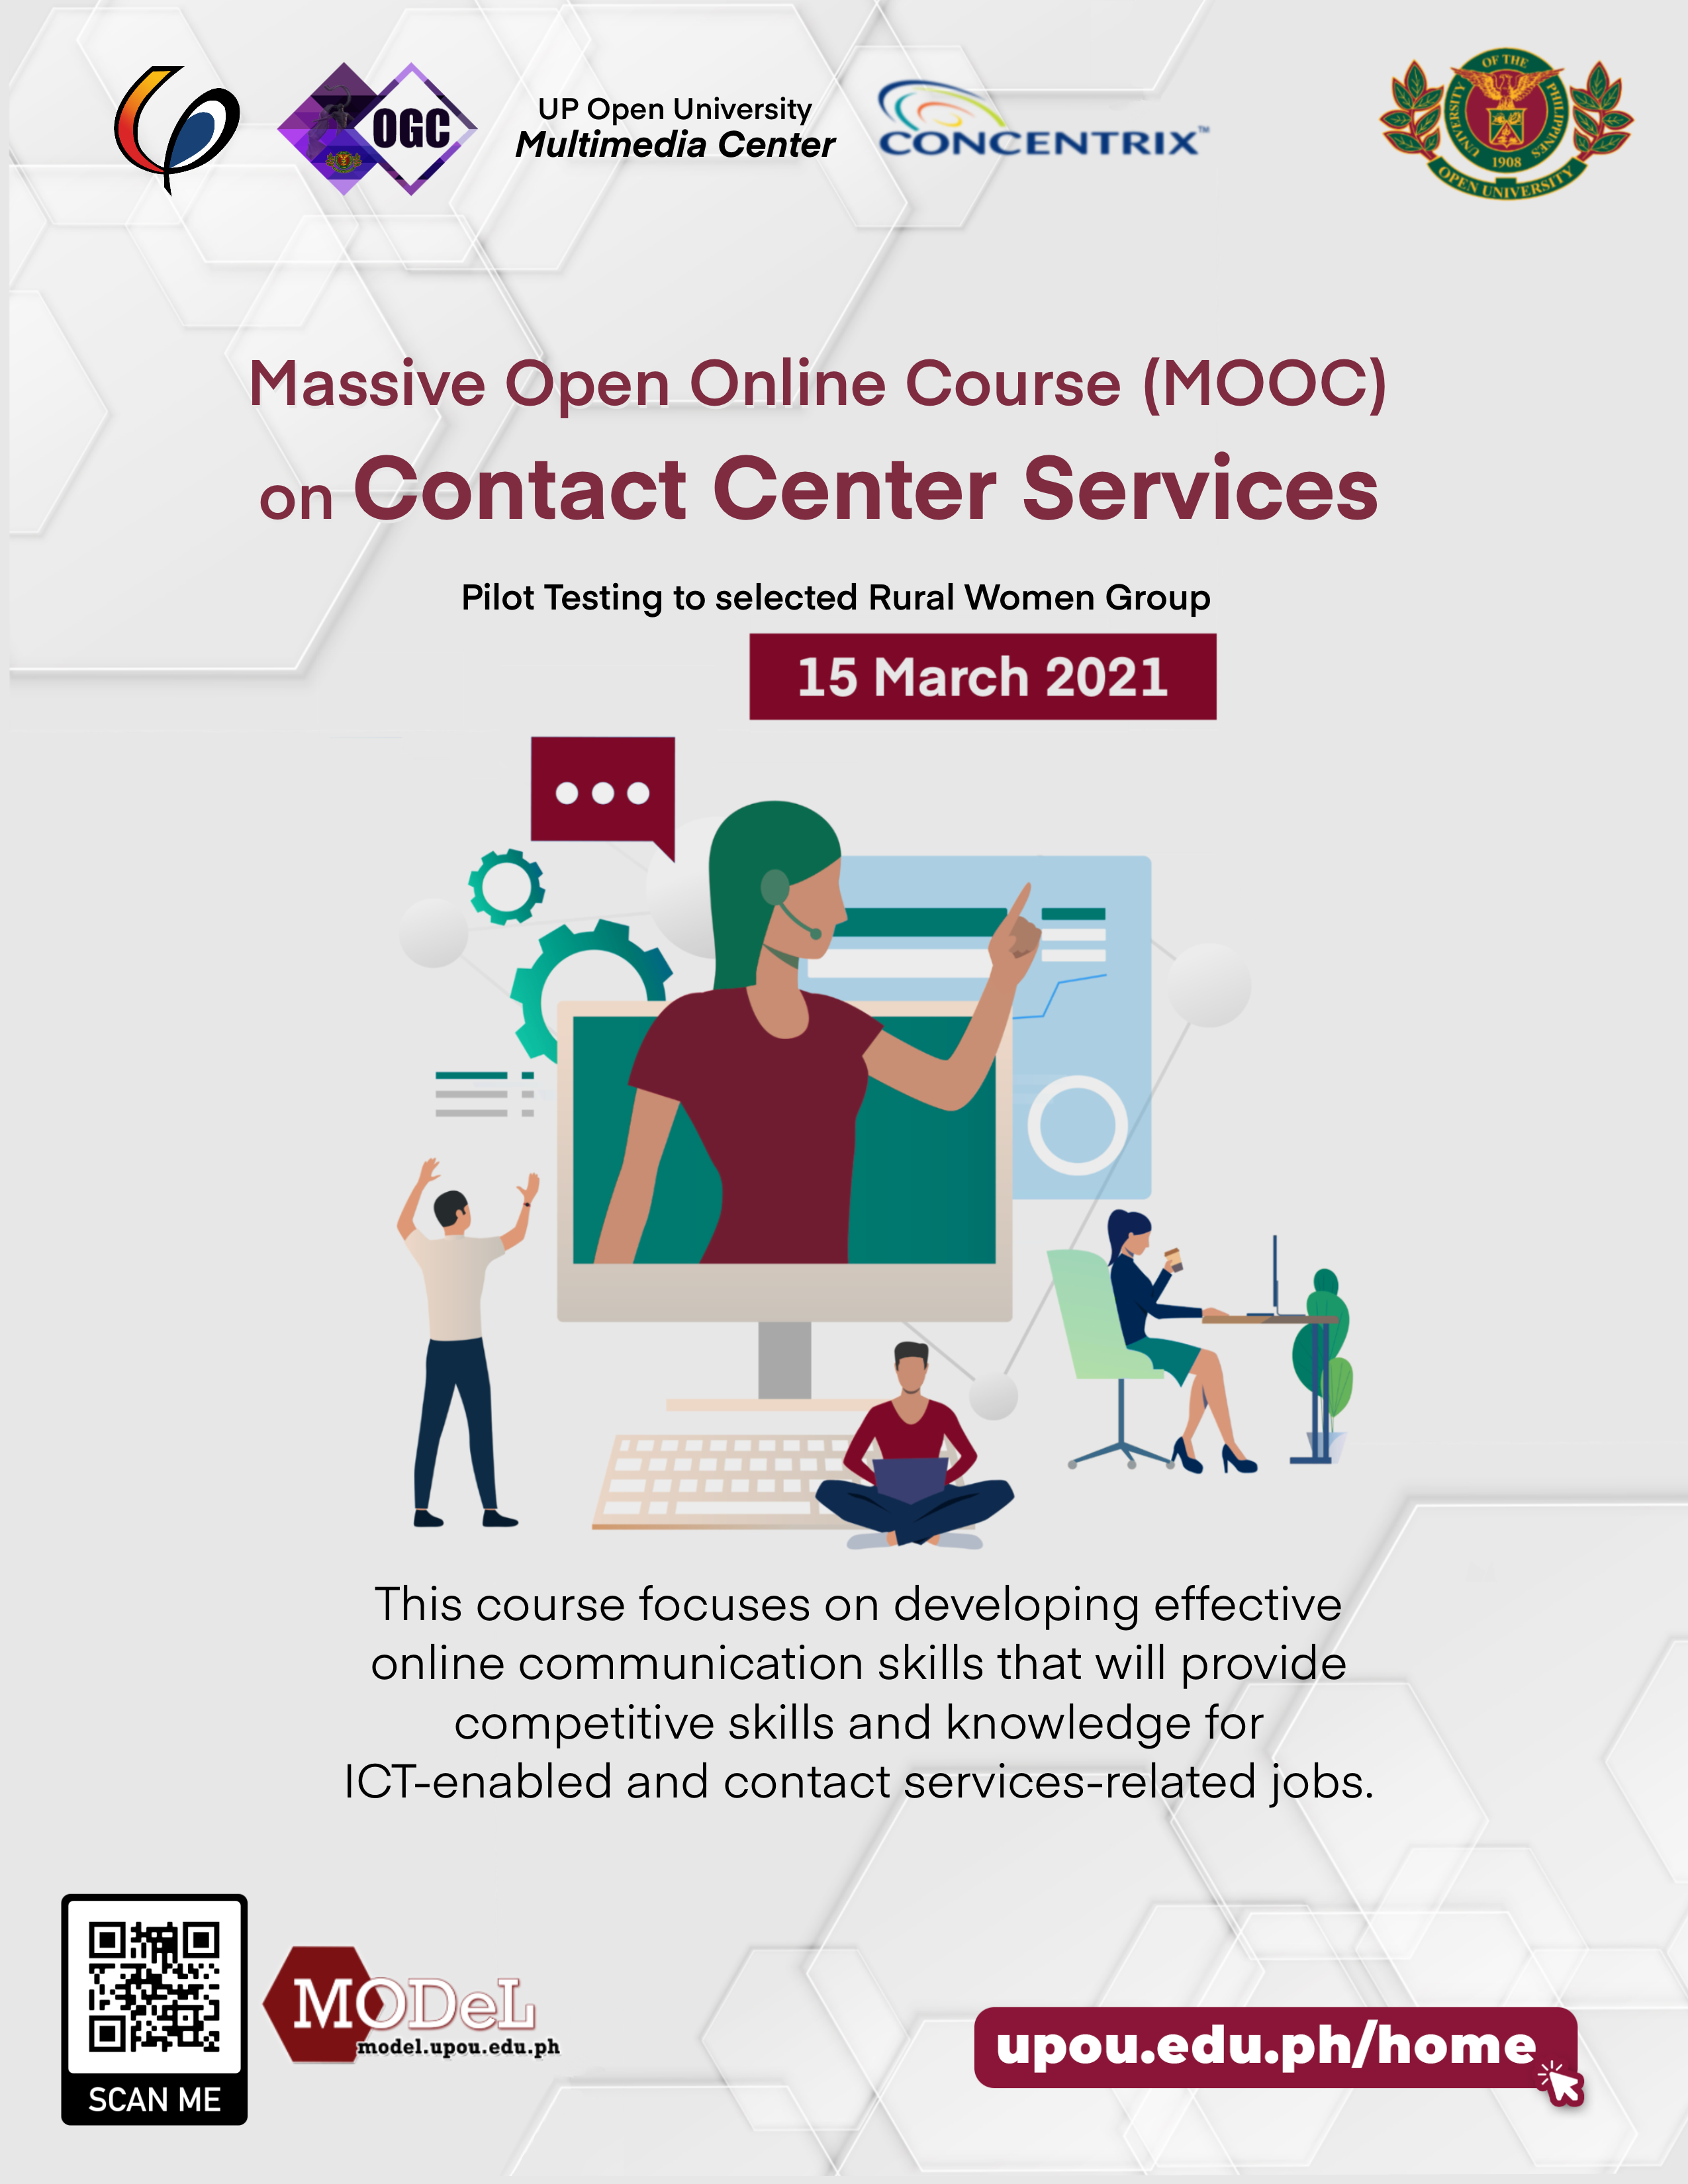 UPOU, Concentrix to launch Massive Open Online Course on Contact Center Services